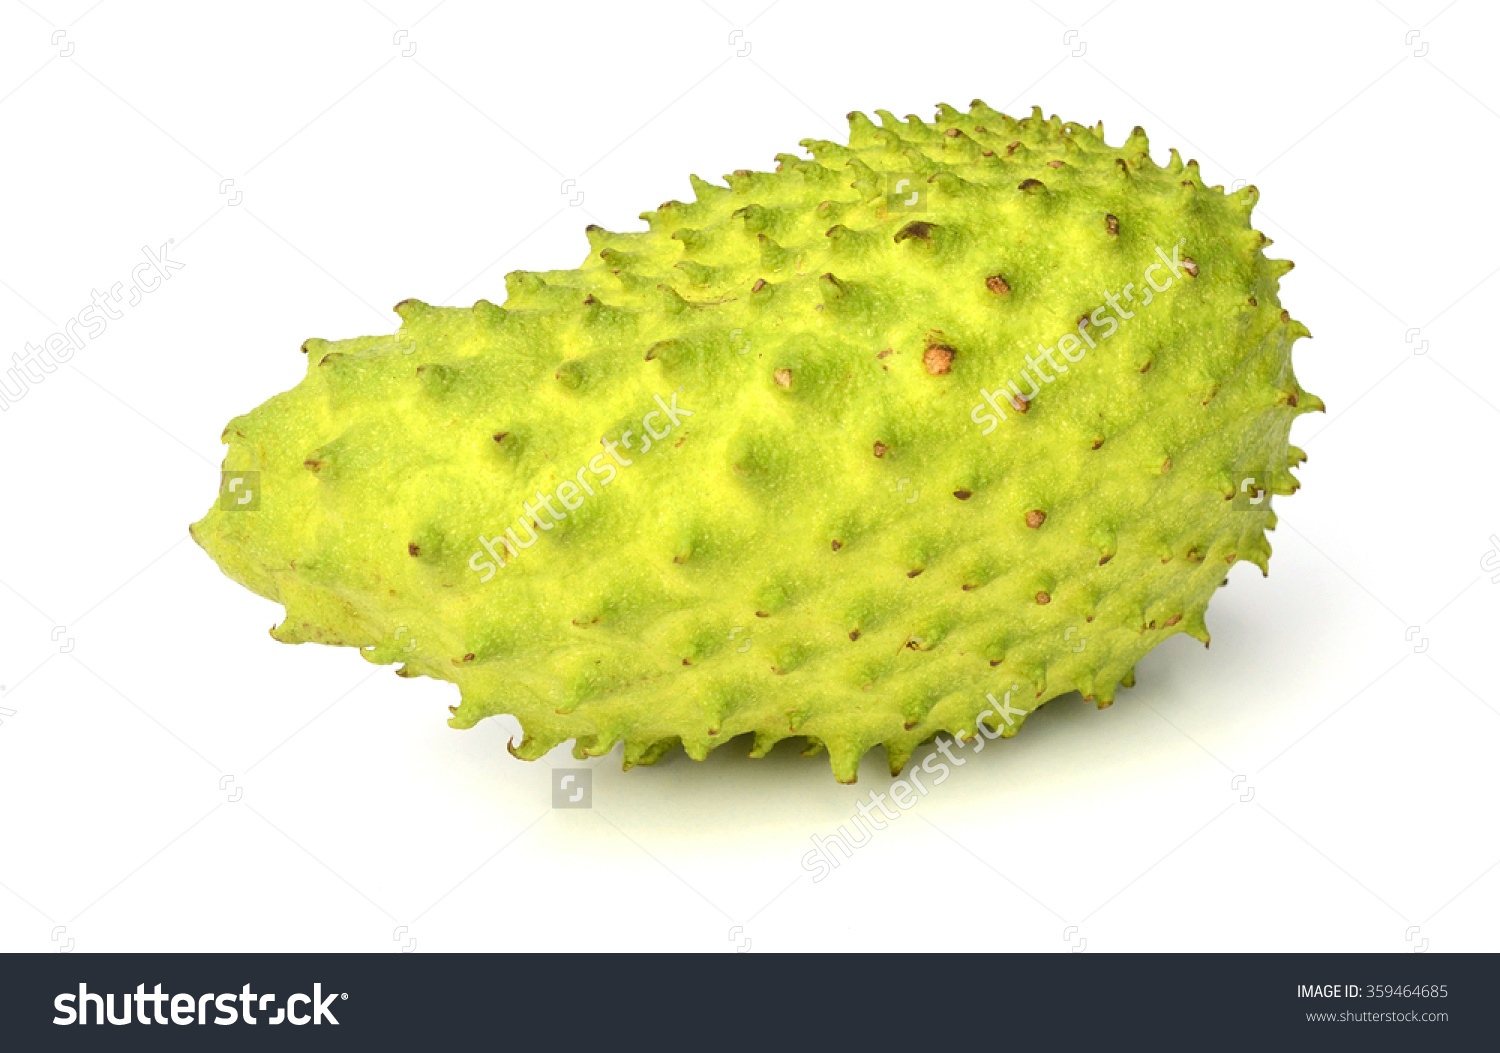 Soursop Prickly Custard Apple Durian Belanda Stock Photo 359464685.